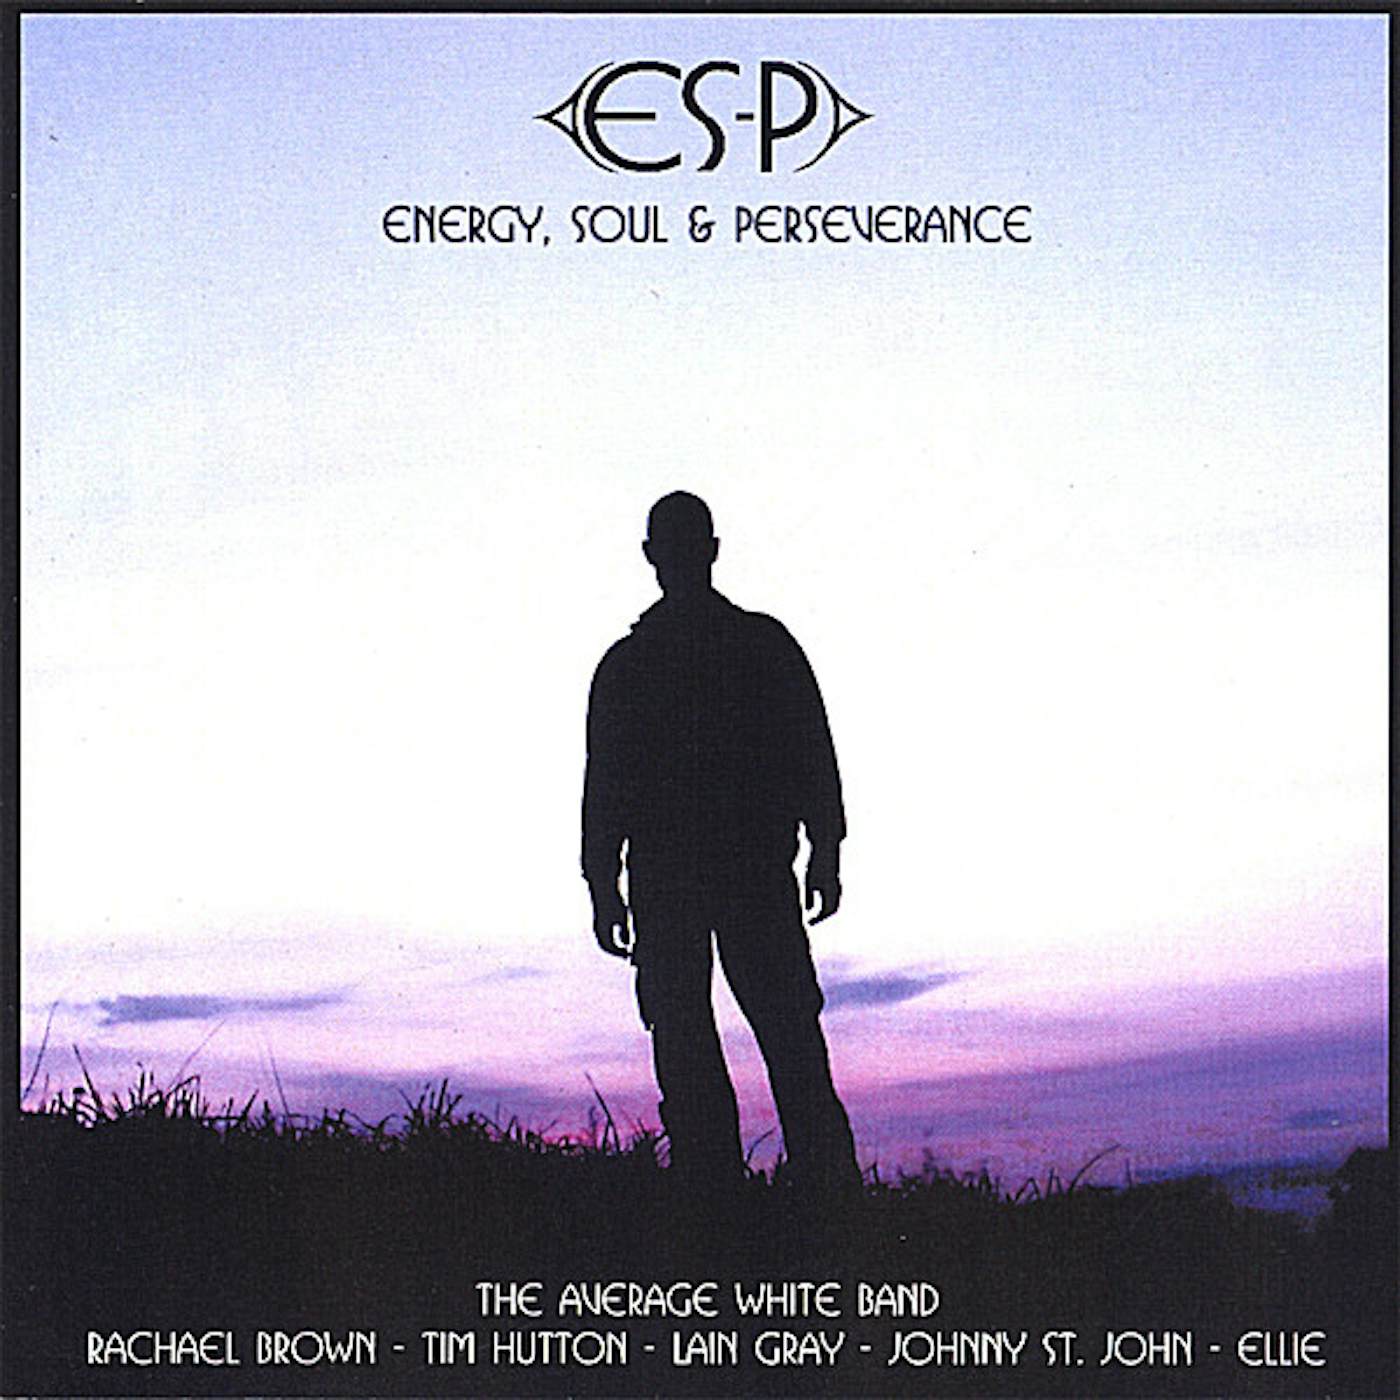 ESP ENERGY SOUL & PERSEVERANCE CD